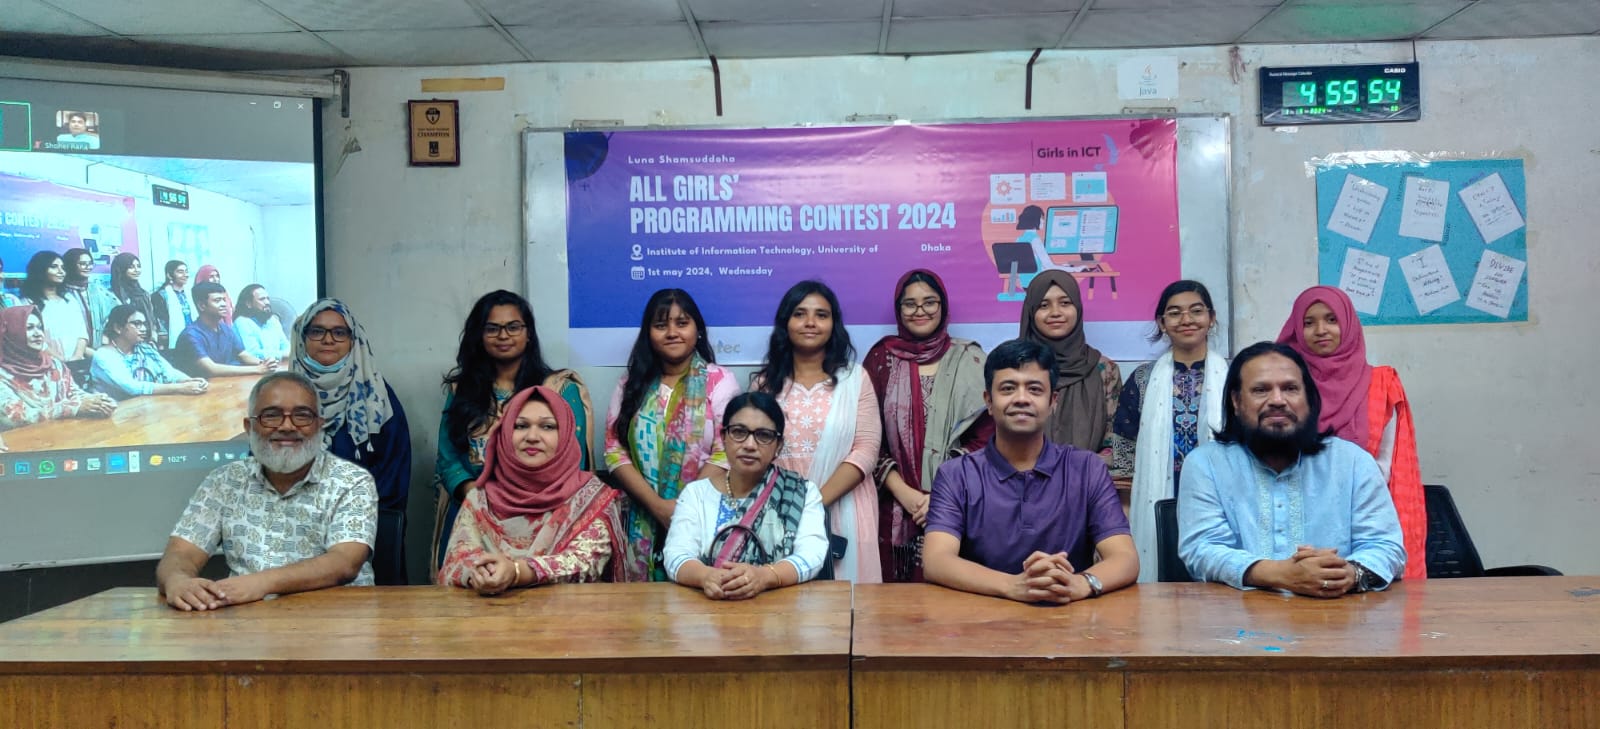 Celebrating Innovation and Diversity: The Luna Shamsuddoha All Girls’ Programming Contest 2024